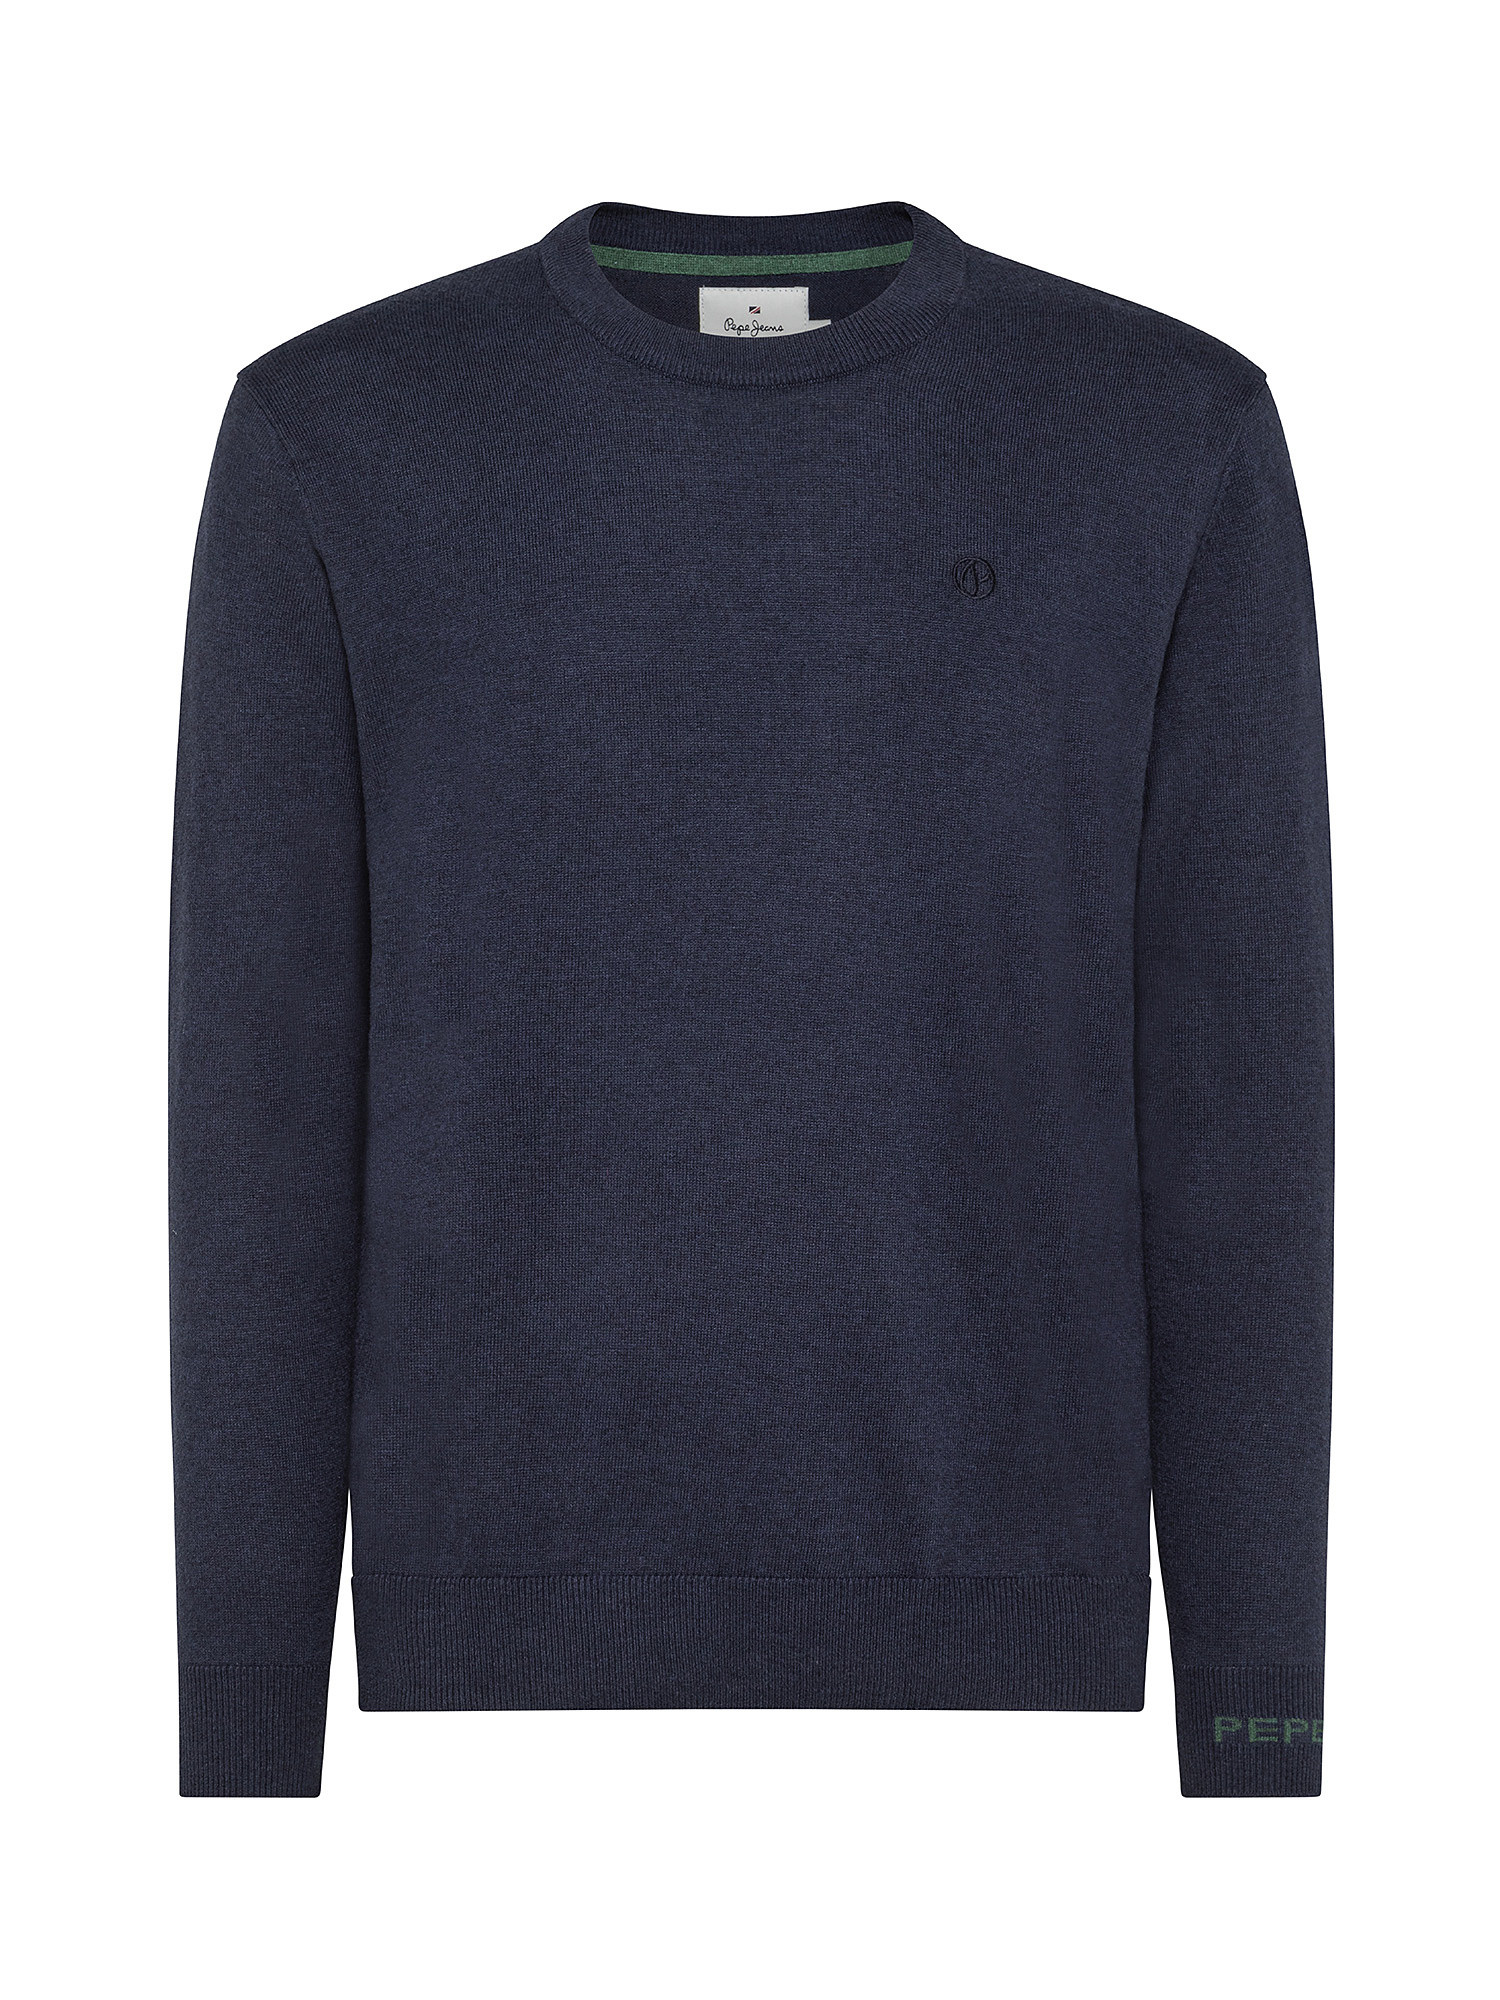 Andre fine knit sweater, Dark Blue, large image number 0